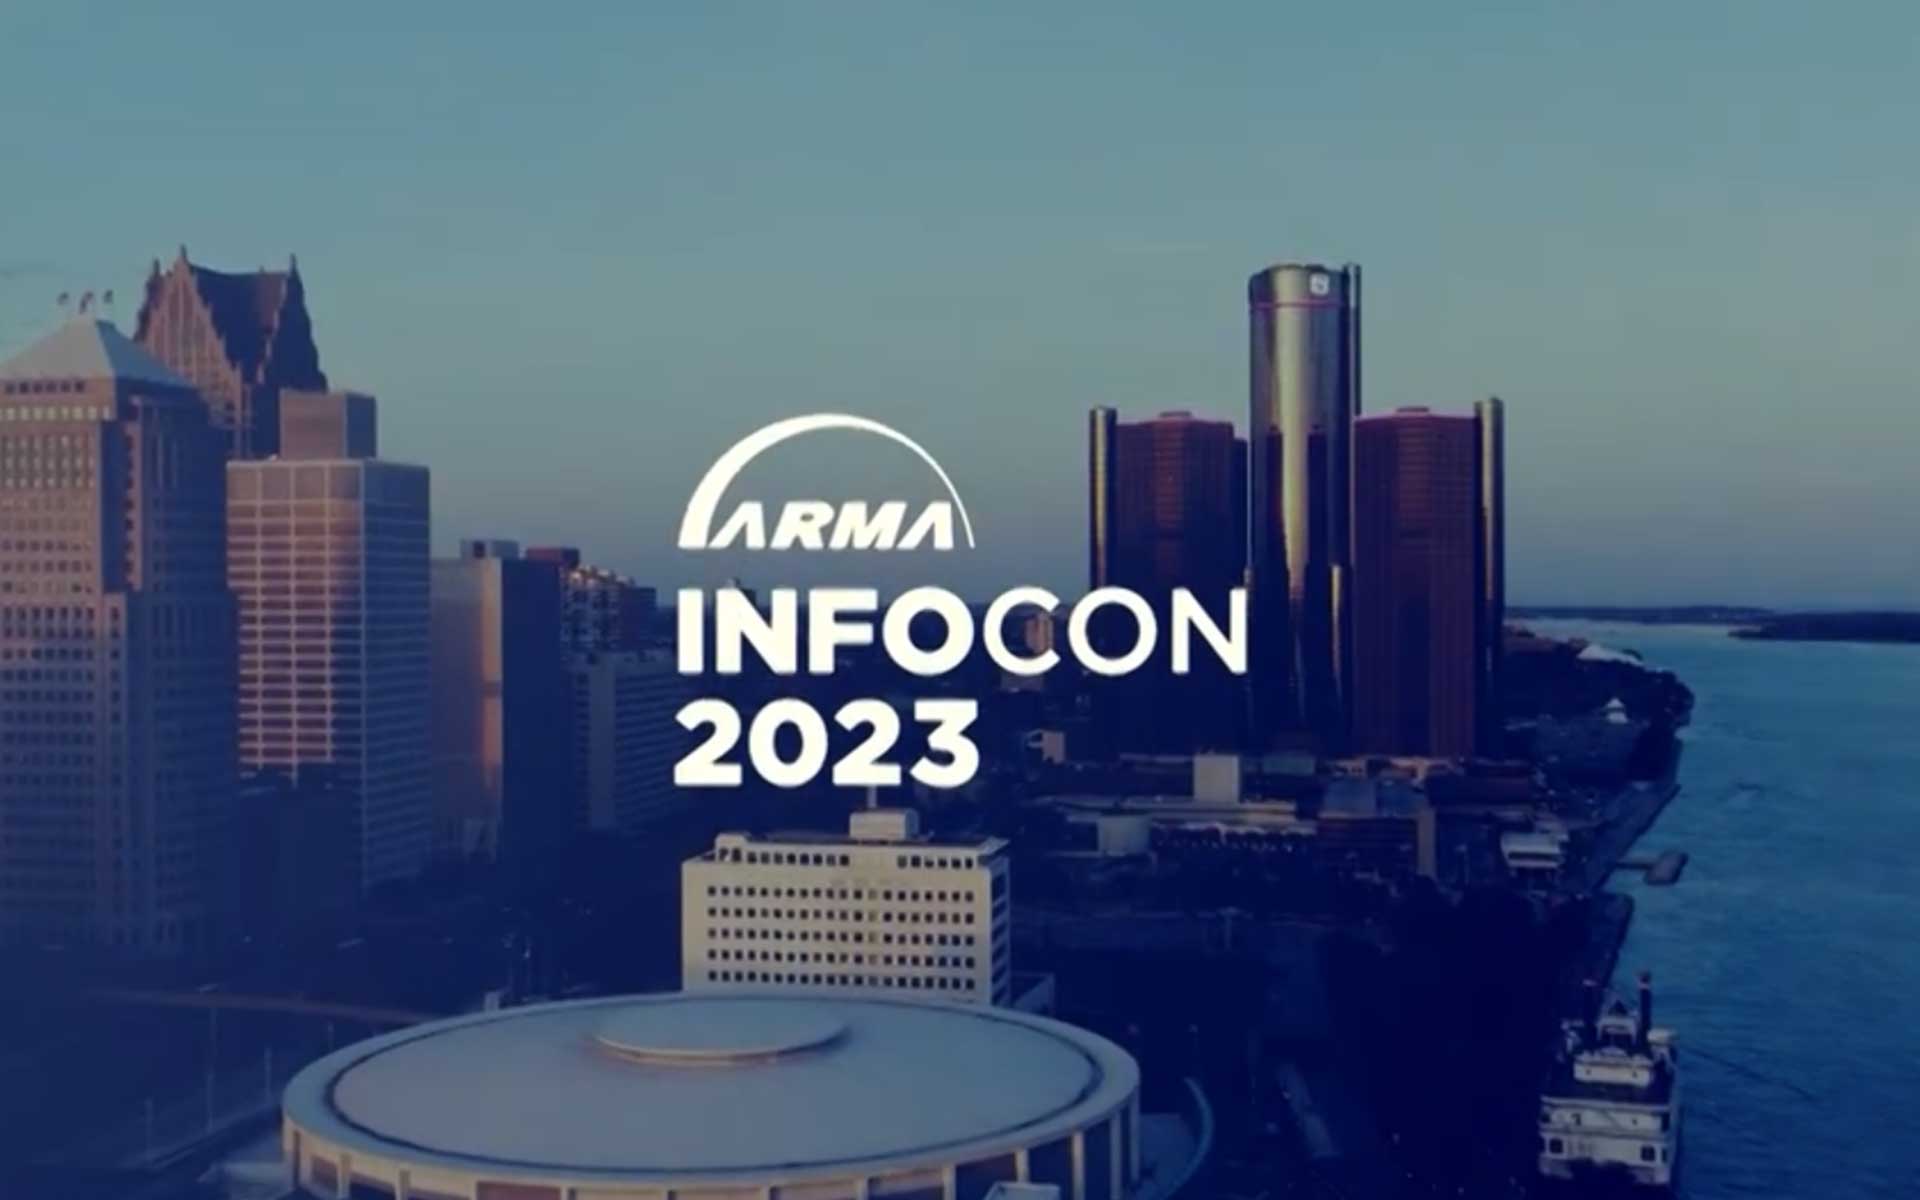 Join FileTrail at ARMA InfoCon 2023! FileTrail